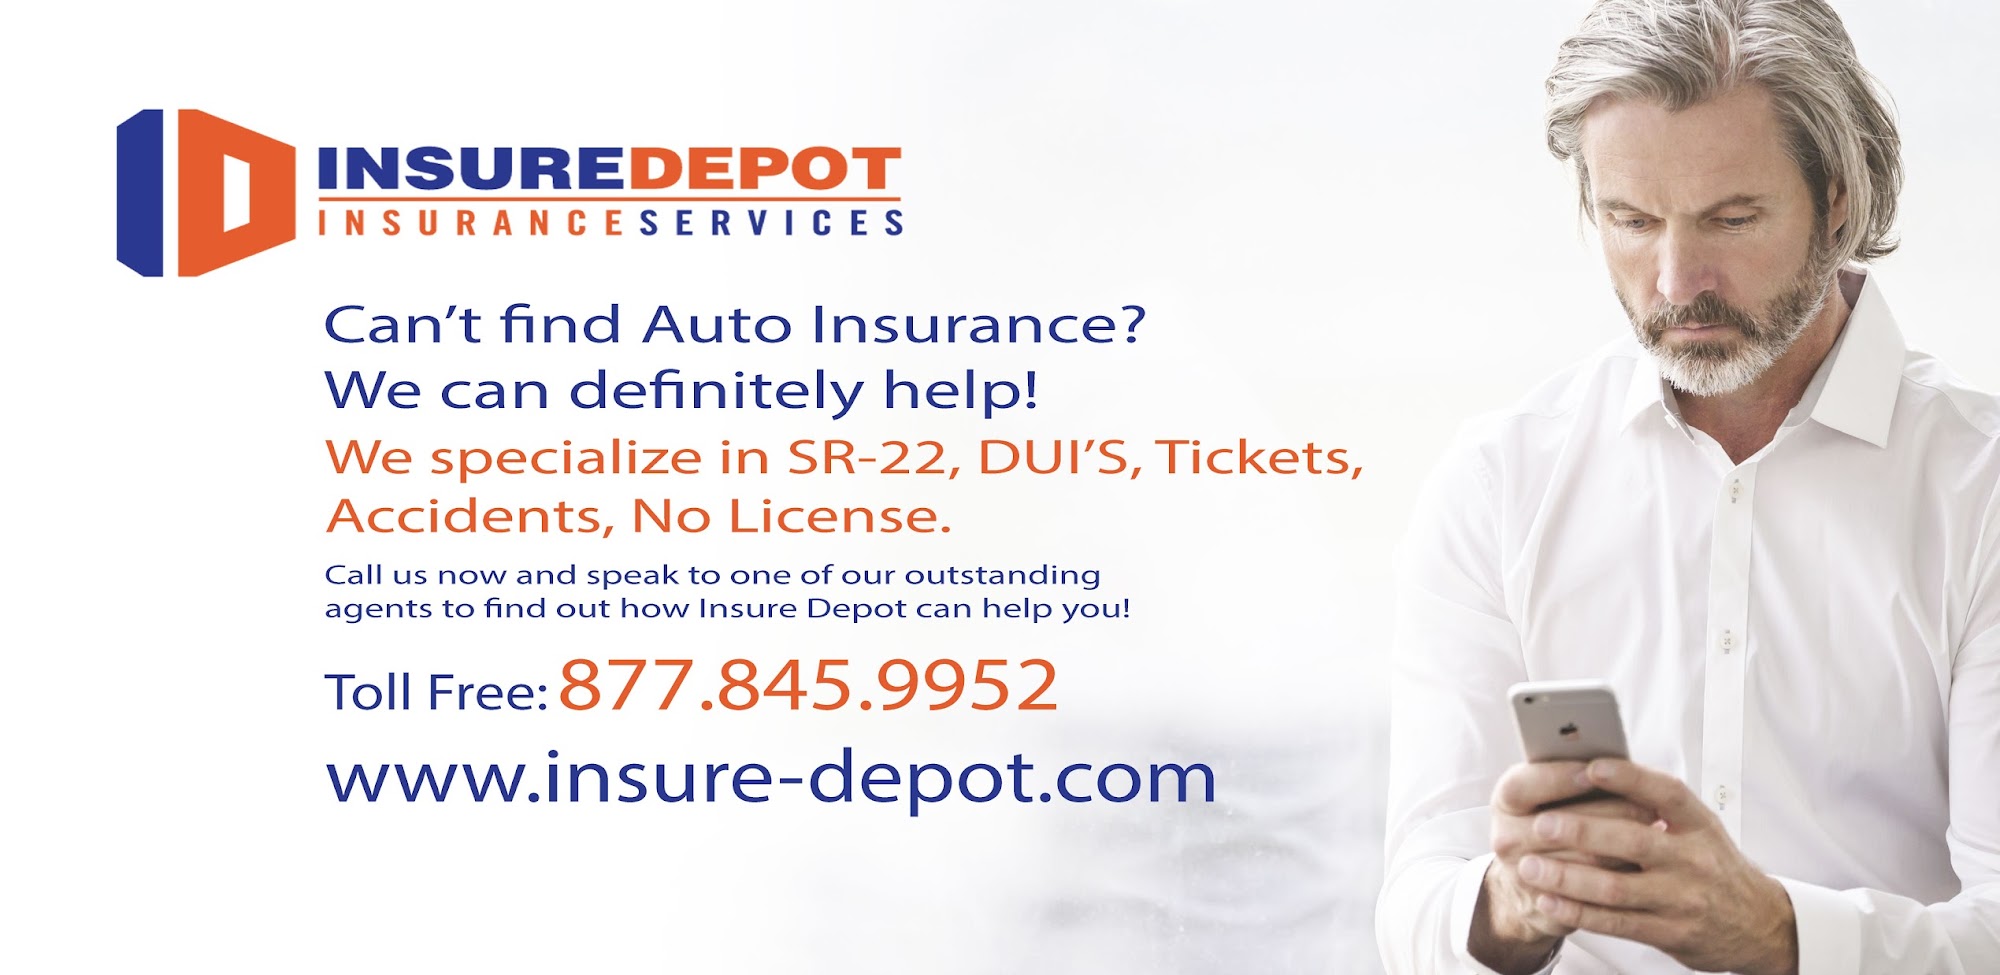 Insure Depot Insurance Services